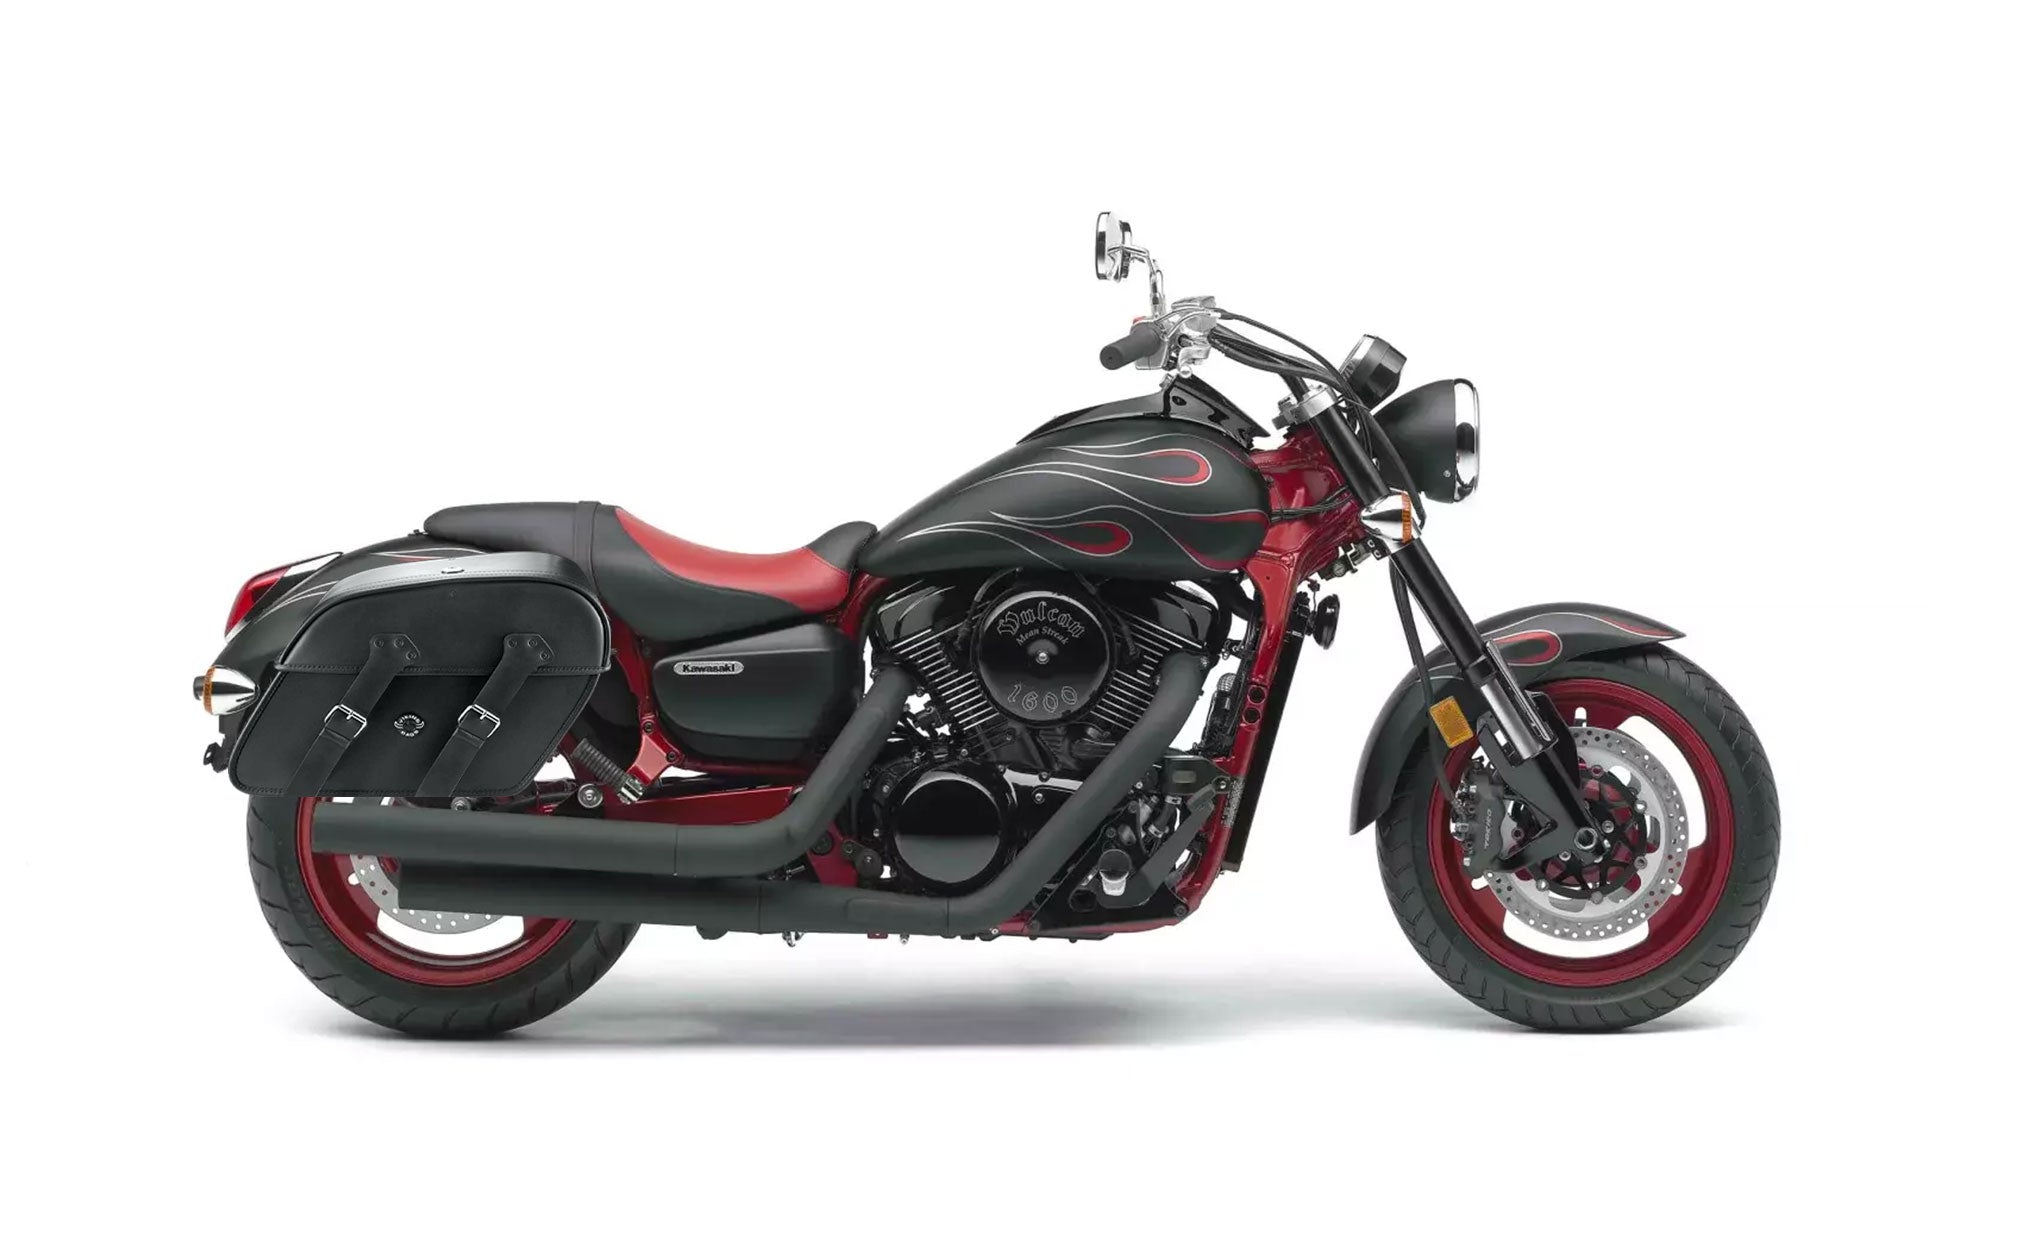 Viking Raven Extra Large Kawasaki Mean Streak 1600 Shock Cut Out Leather Motorcycle Saddlebags on Bike Photo @expand